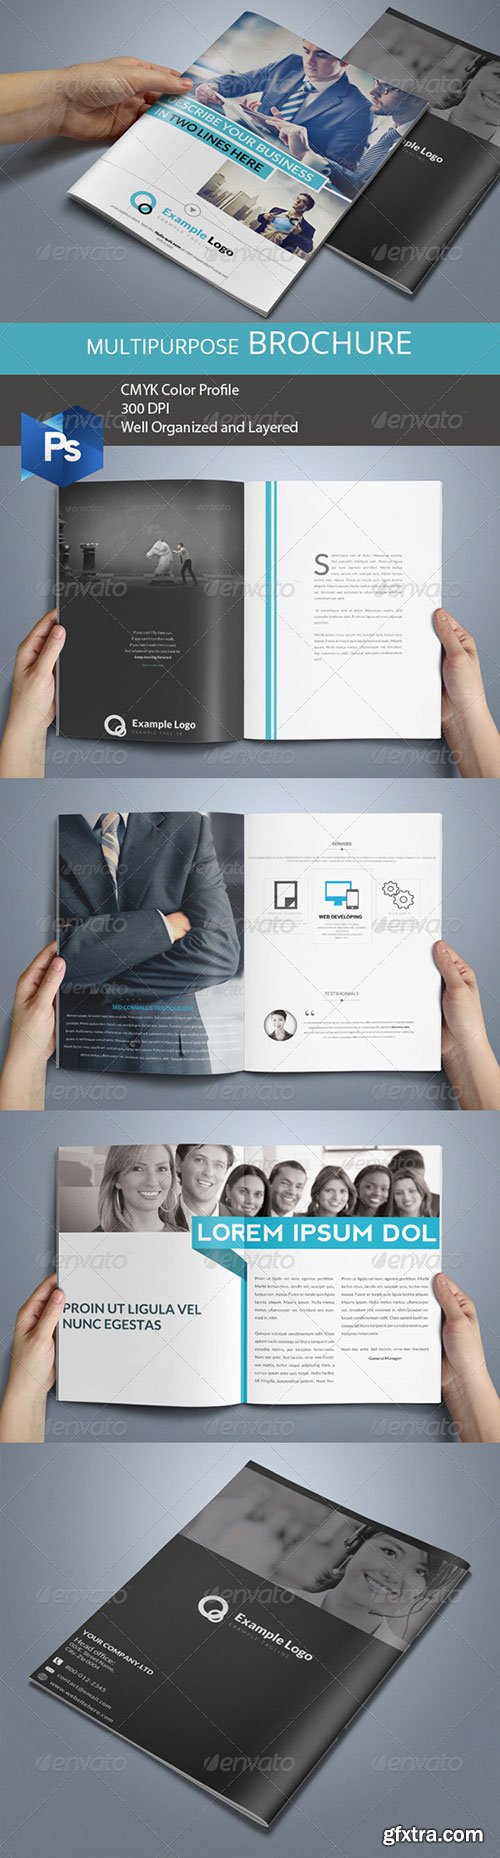 GraphicRiver - Multipurpose Business Brochure 6898315